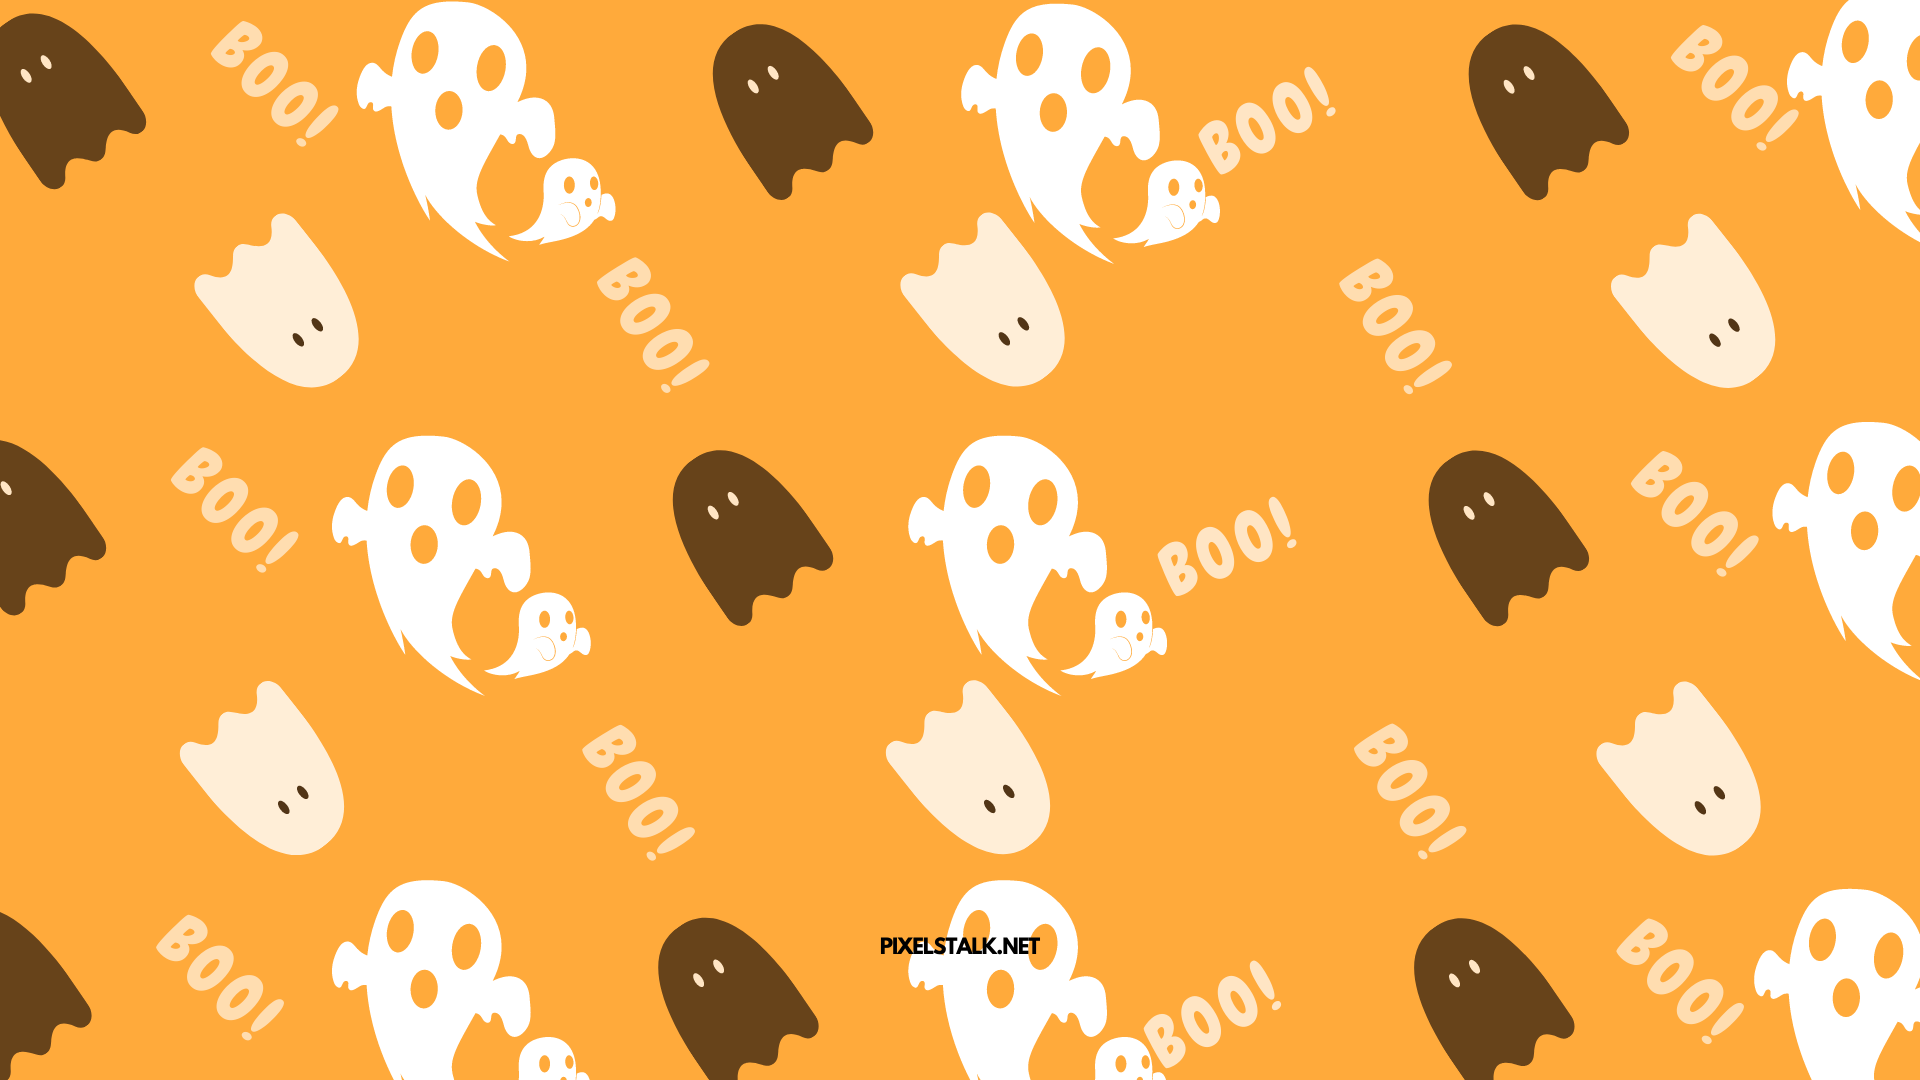 Happy Halloween 2021 Wallpaper HD free download